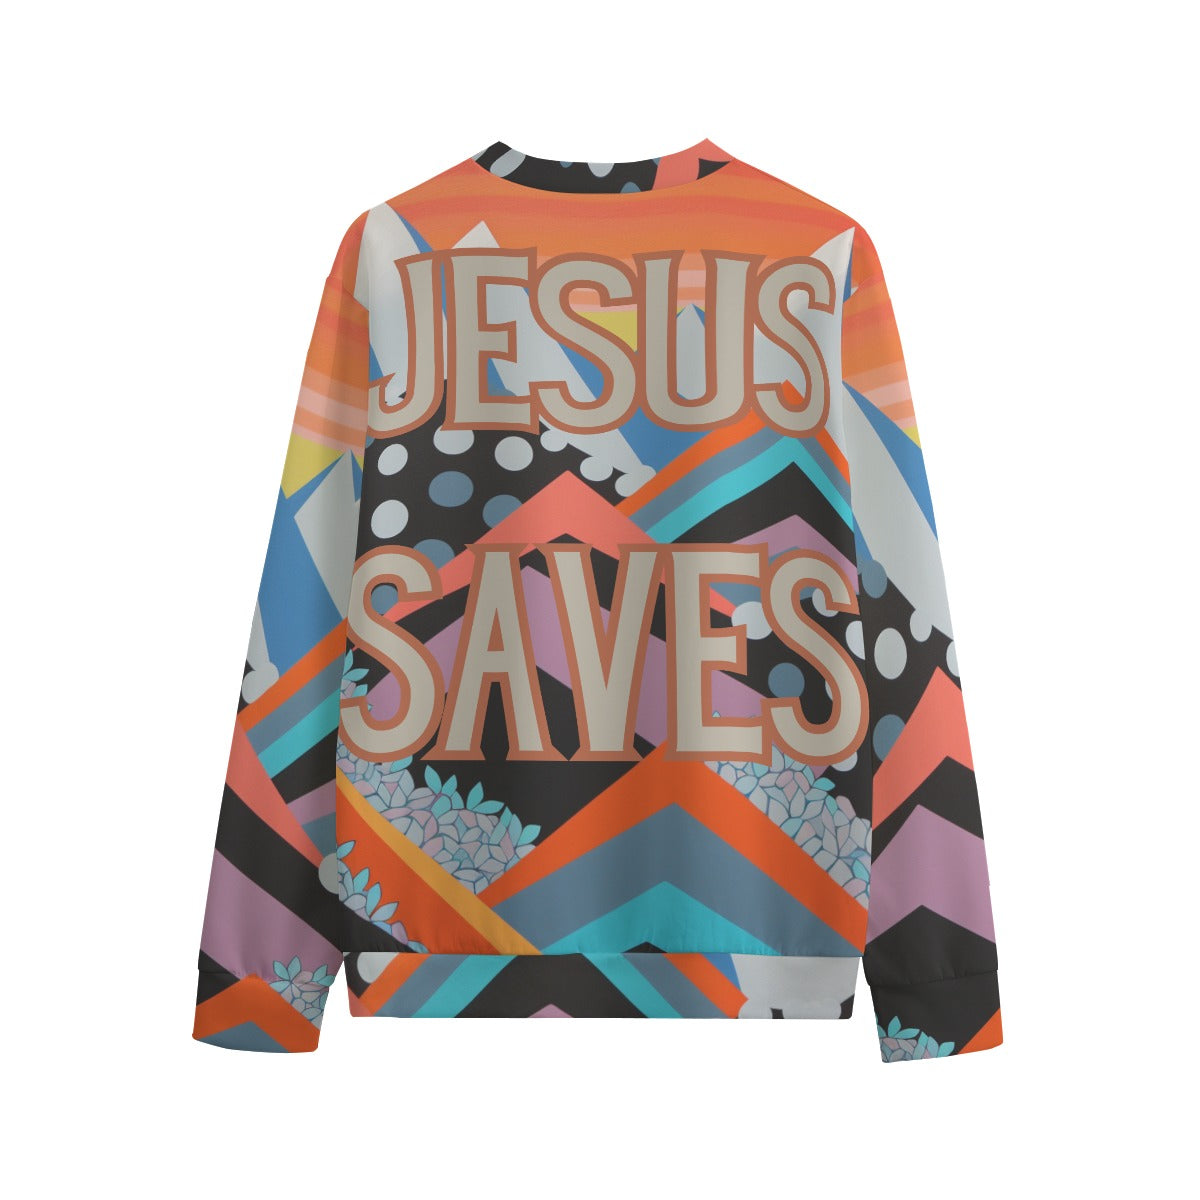 Jesus Saves Sweatshirt